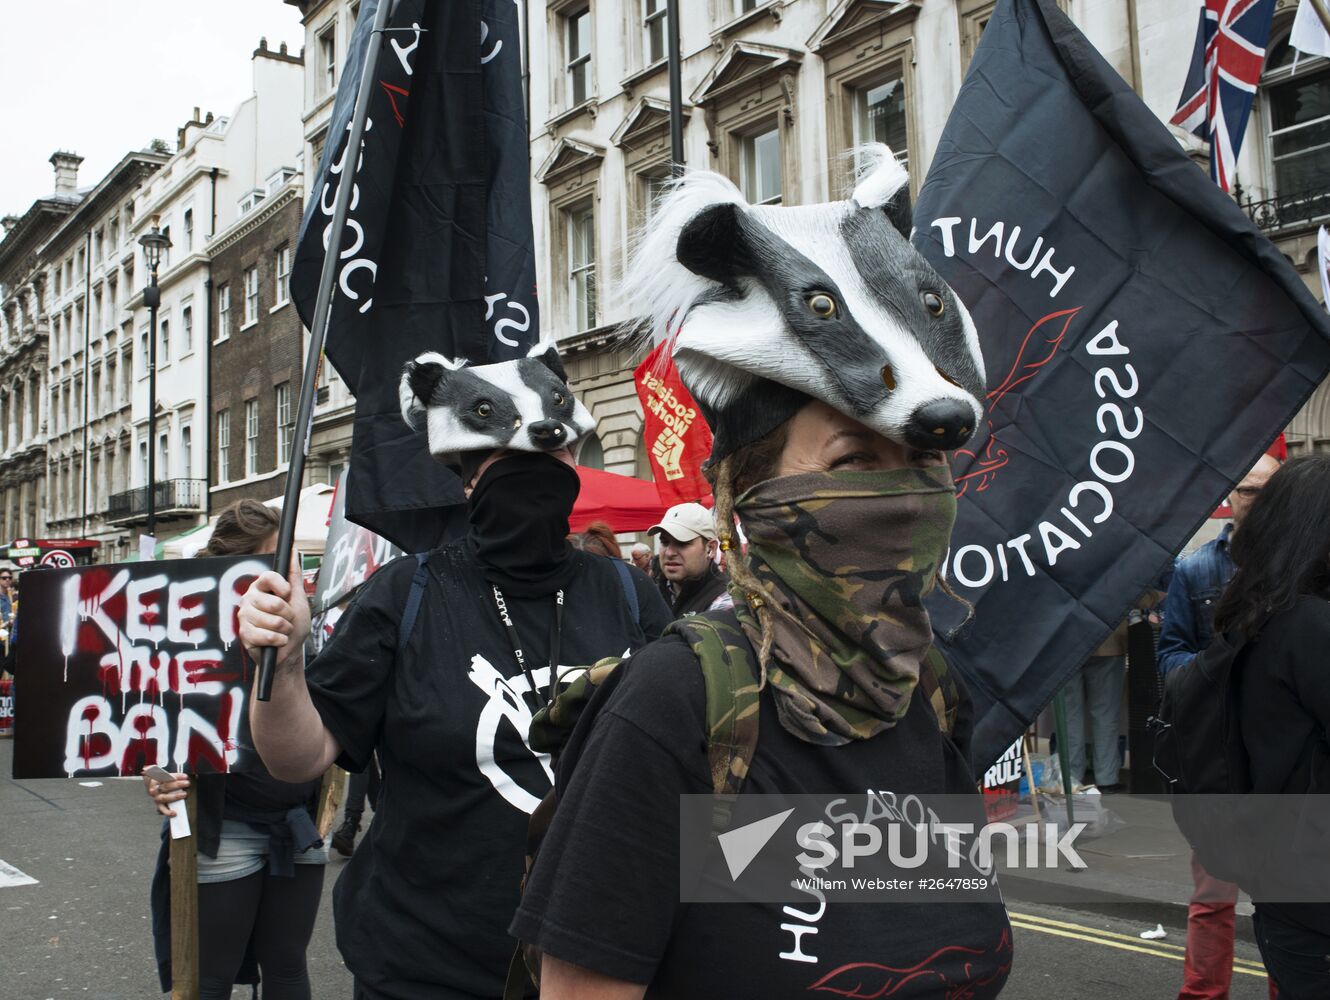 Anti-austerity rally in London